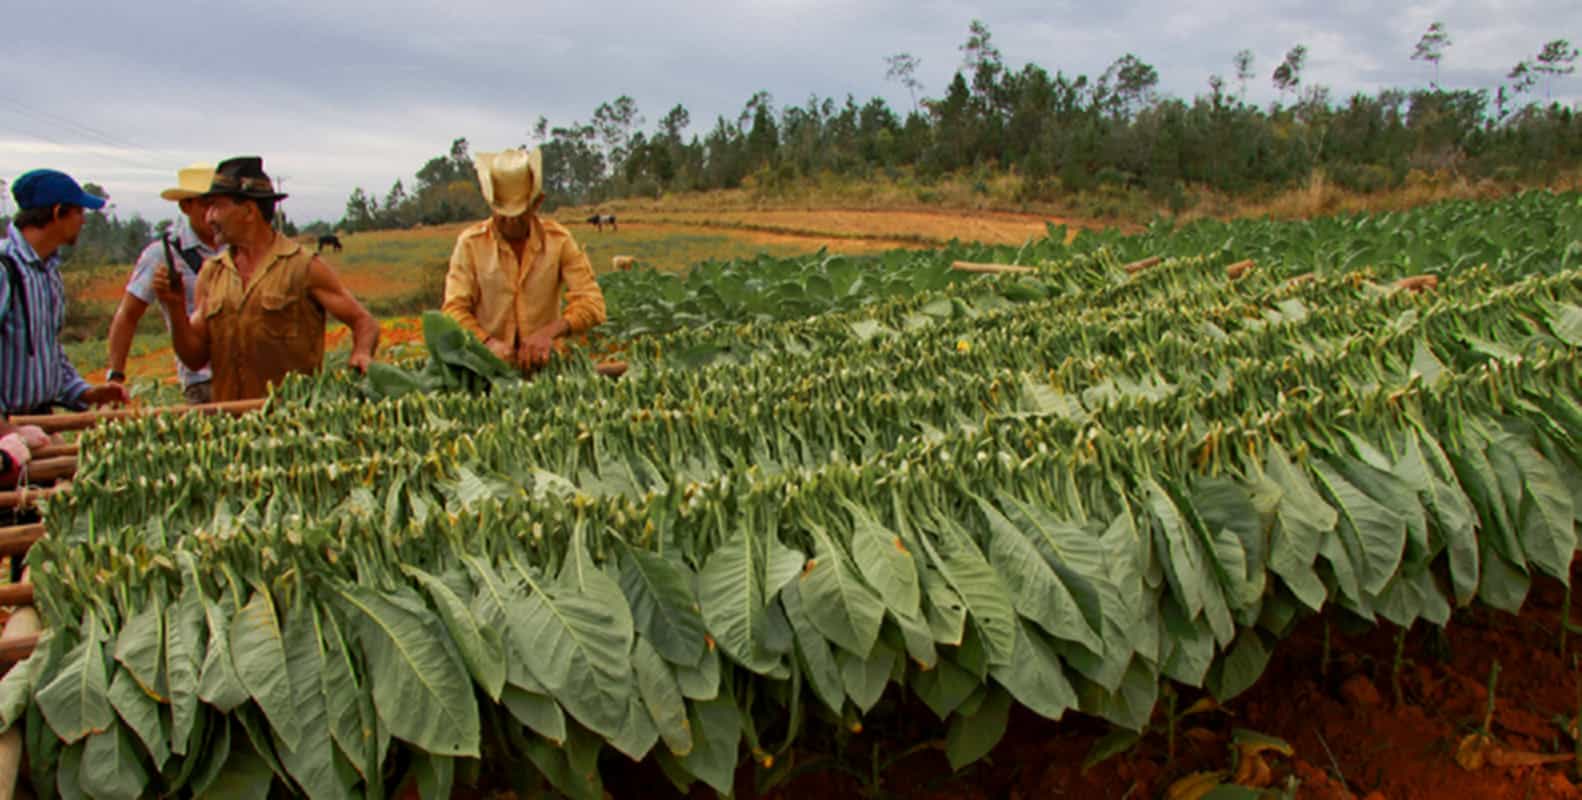 Cuban tobacco farmer tending to his crop